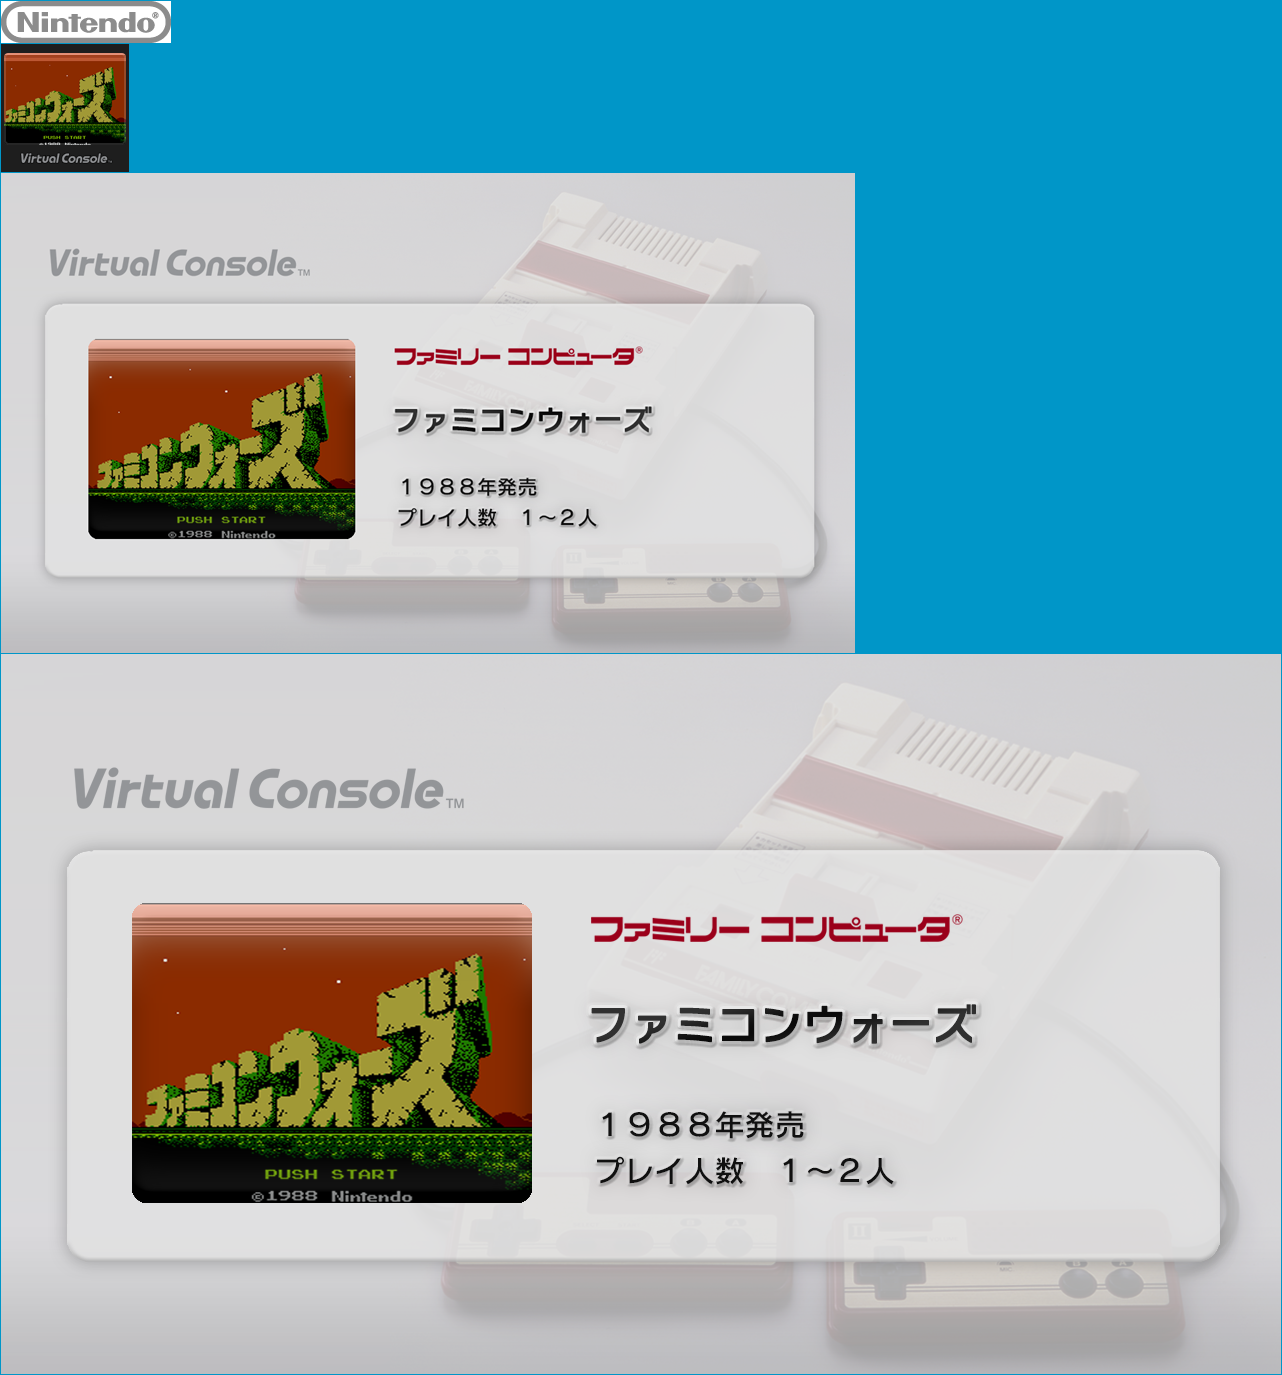 Virtual Console - Famicom Wars